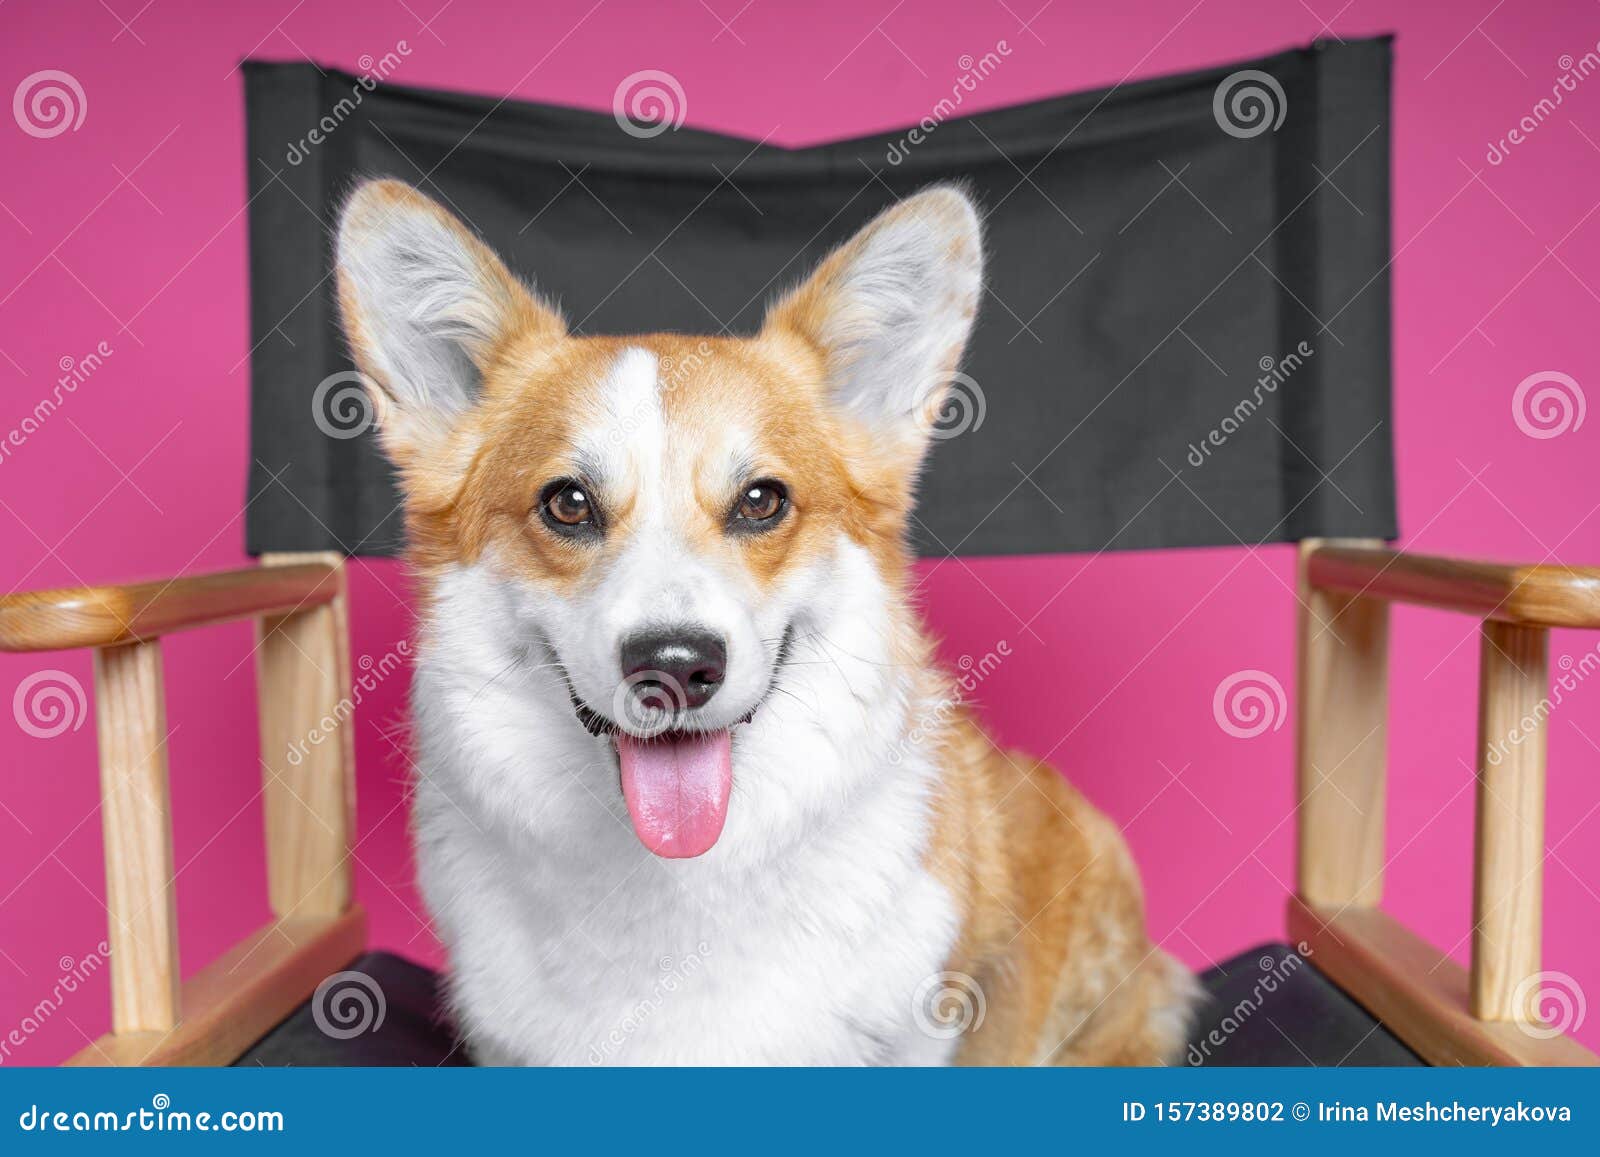 beautiful dog welsh pembroke corgi sits on a directorÃ¢â¬â¢s armchair on a pink background